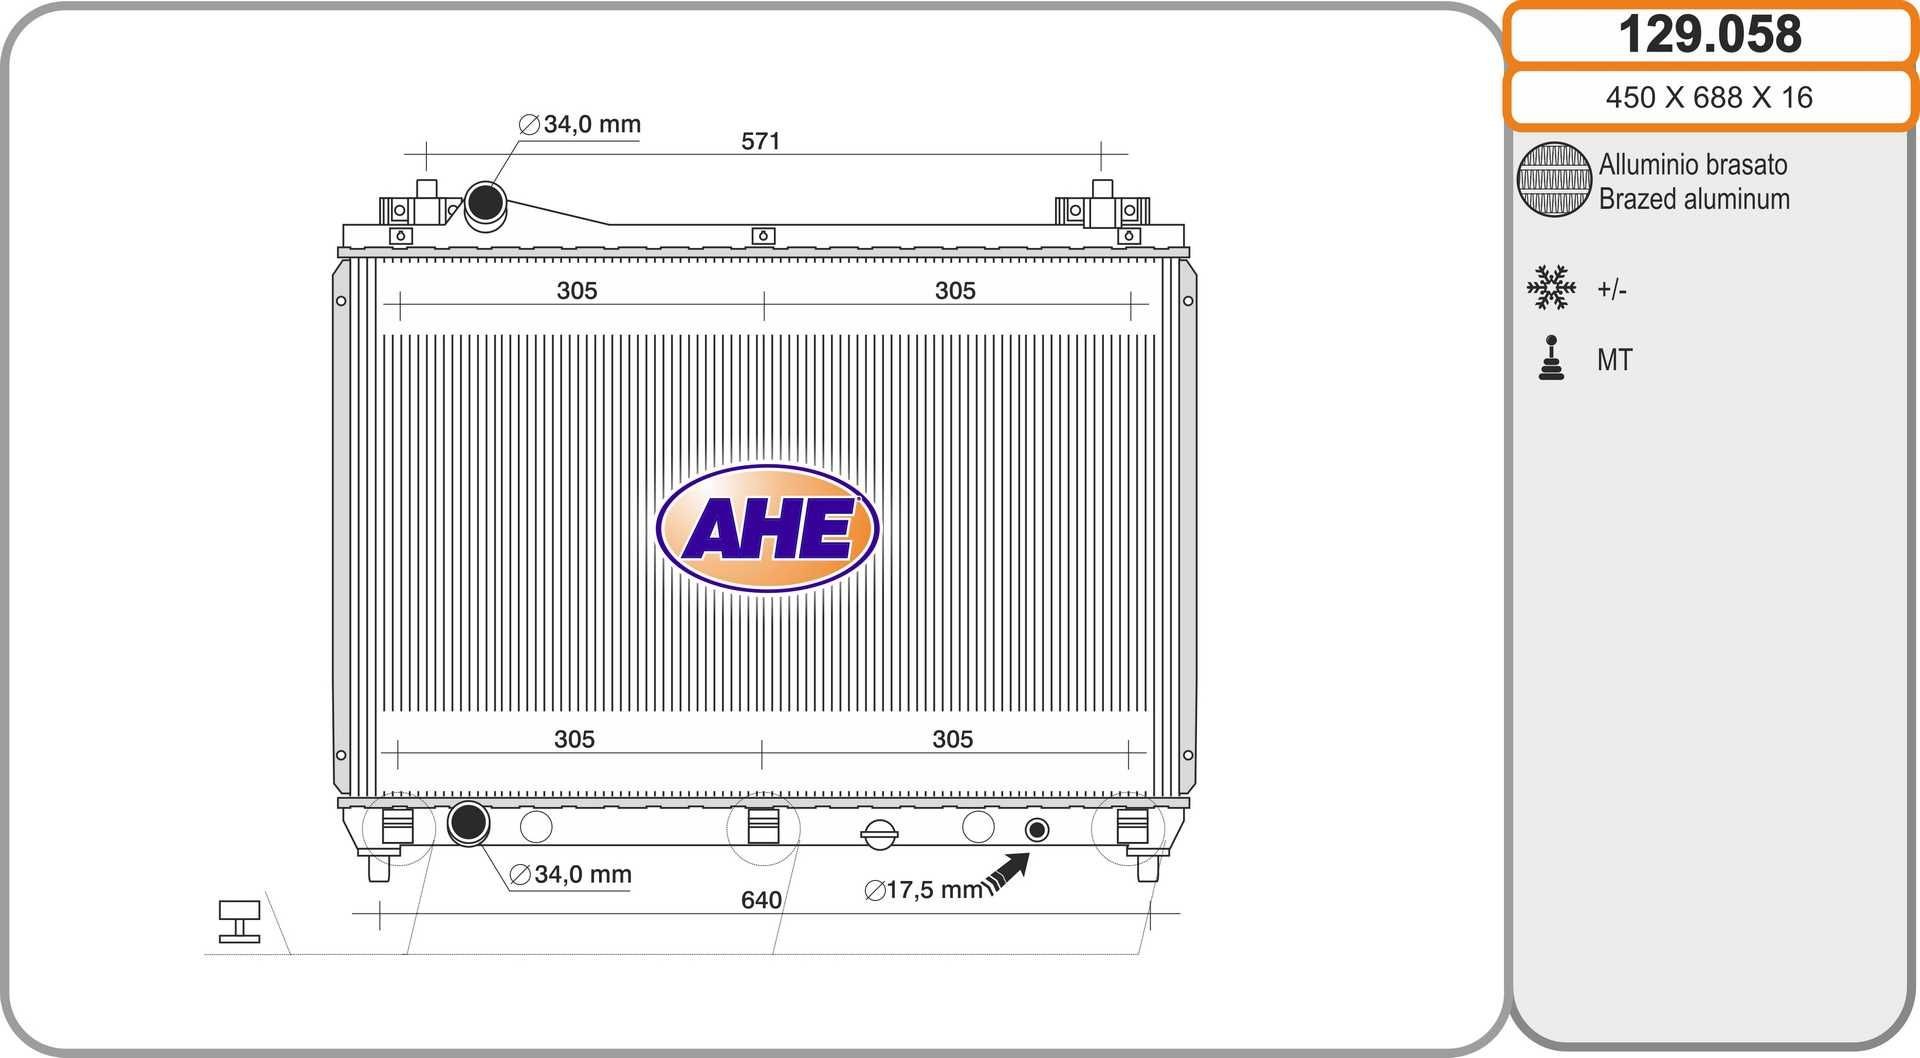 AHE 450 x 688 x 16 mm Radiator 129.058 buy